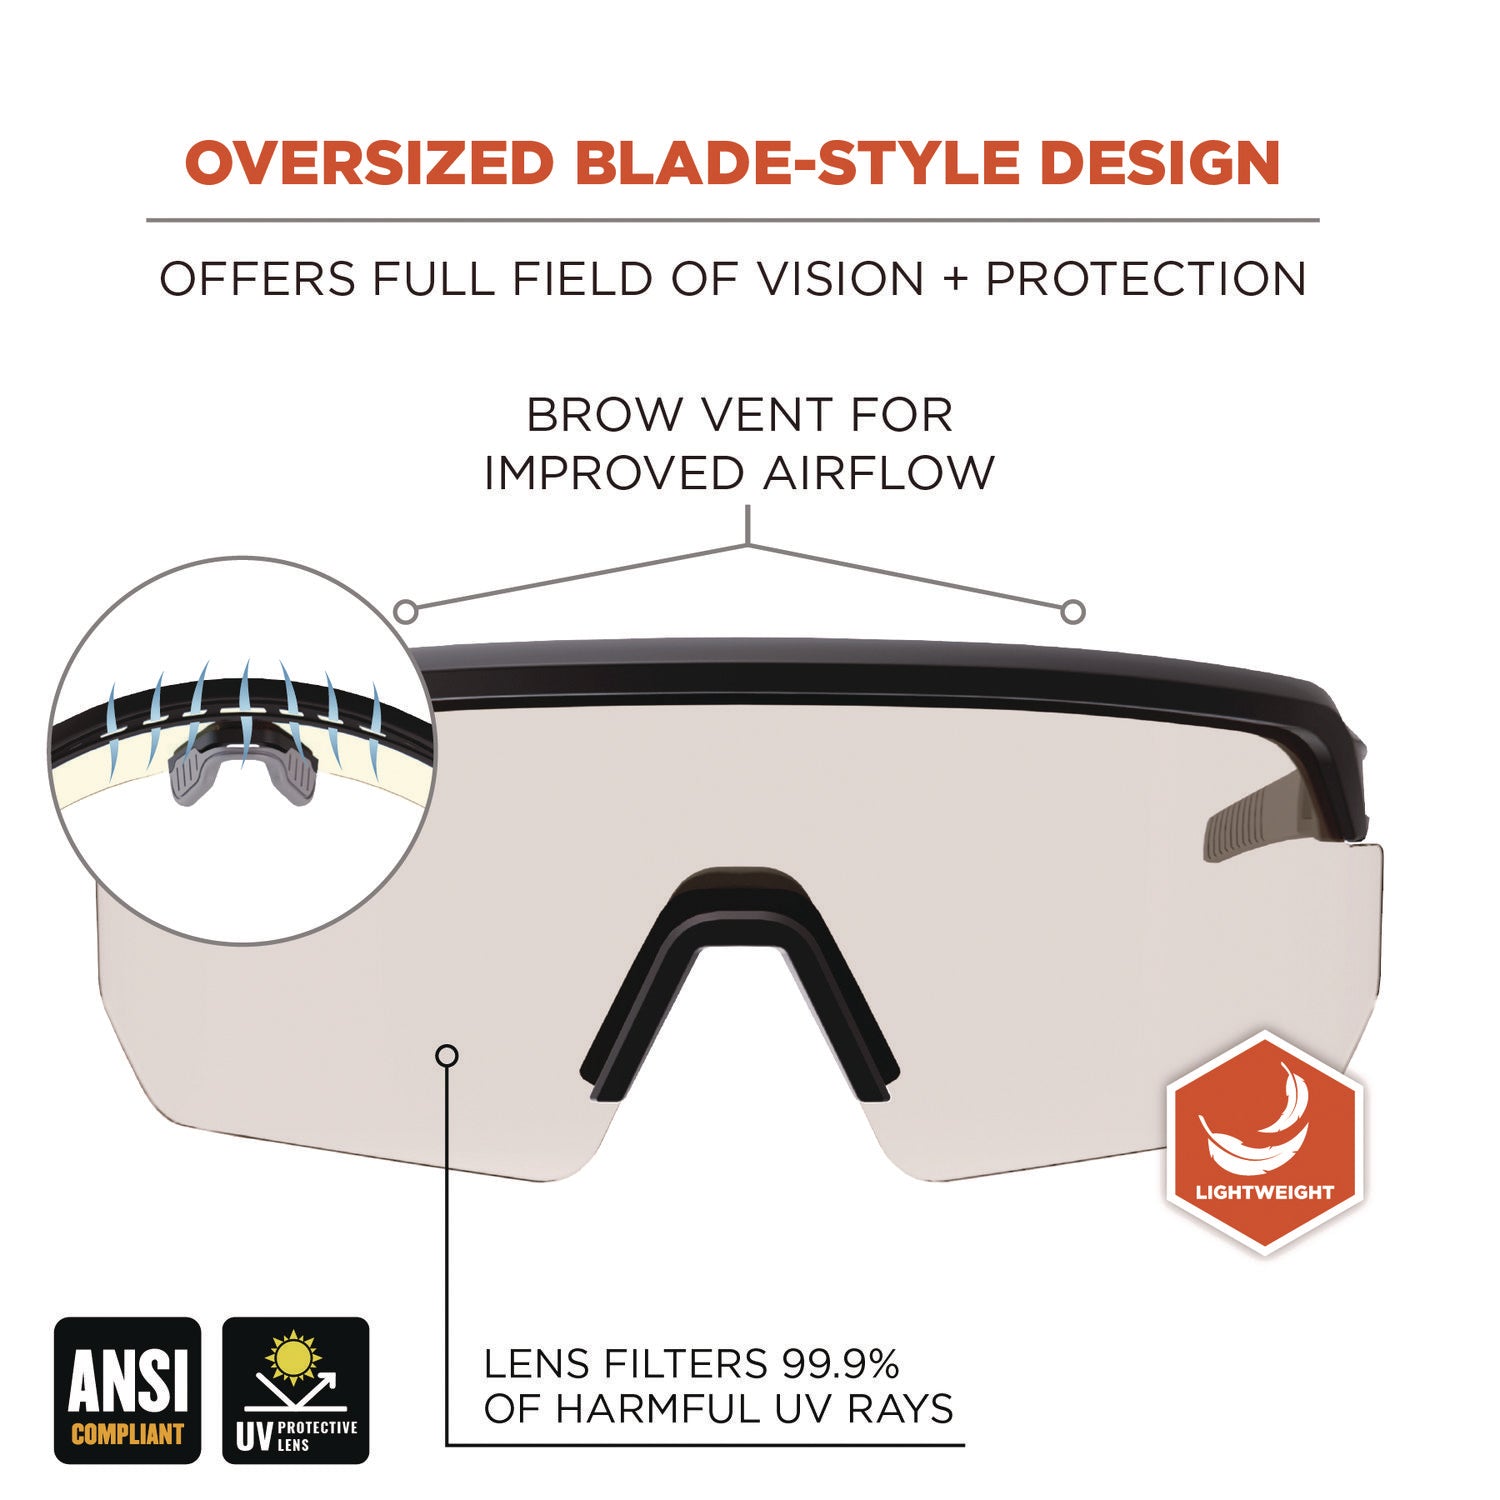 skullerz-aegir-anti-scratch-enhanced-anti-fog-safety-glasses-black-framein-outdoor-polycarbonate-lensships-in-1-3-bus-days_ego55004 - 4